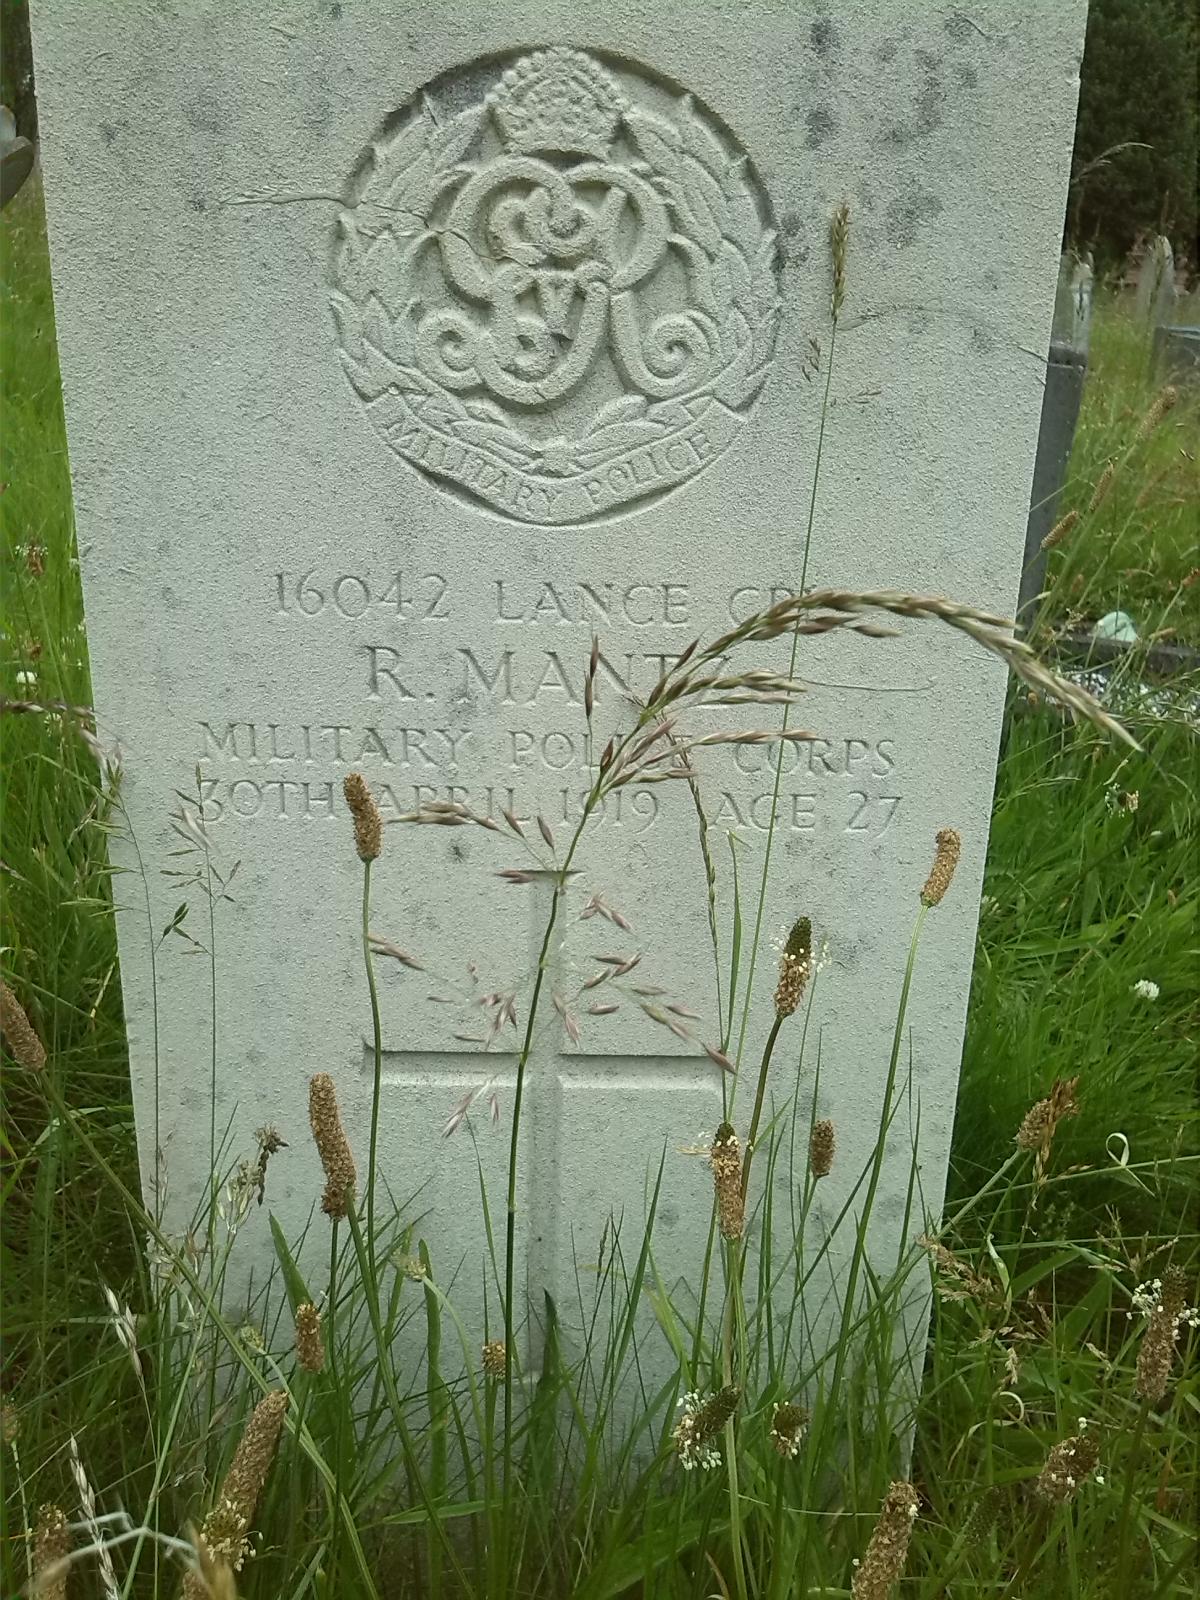 Ralph Mantz's head stone Rothesay Road Cemetery